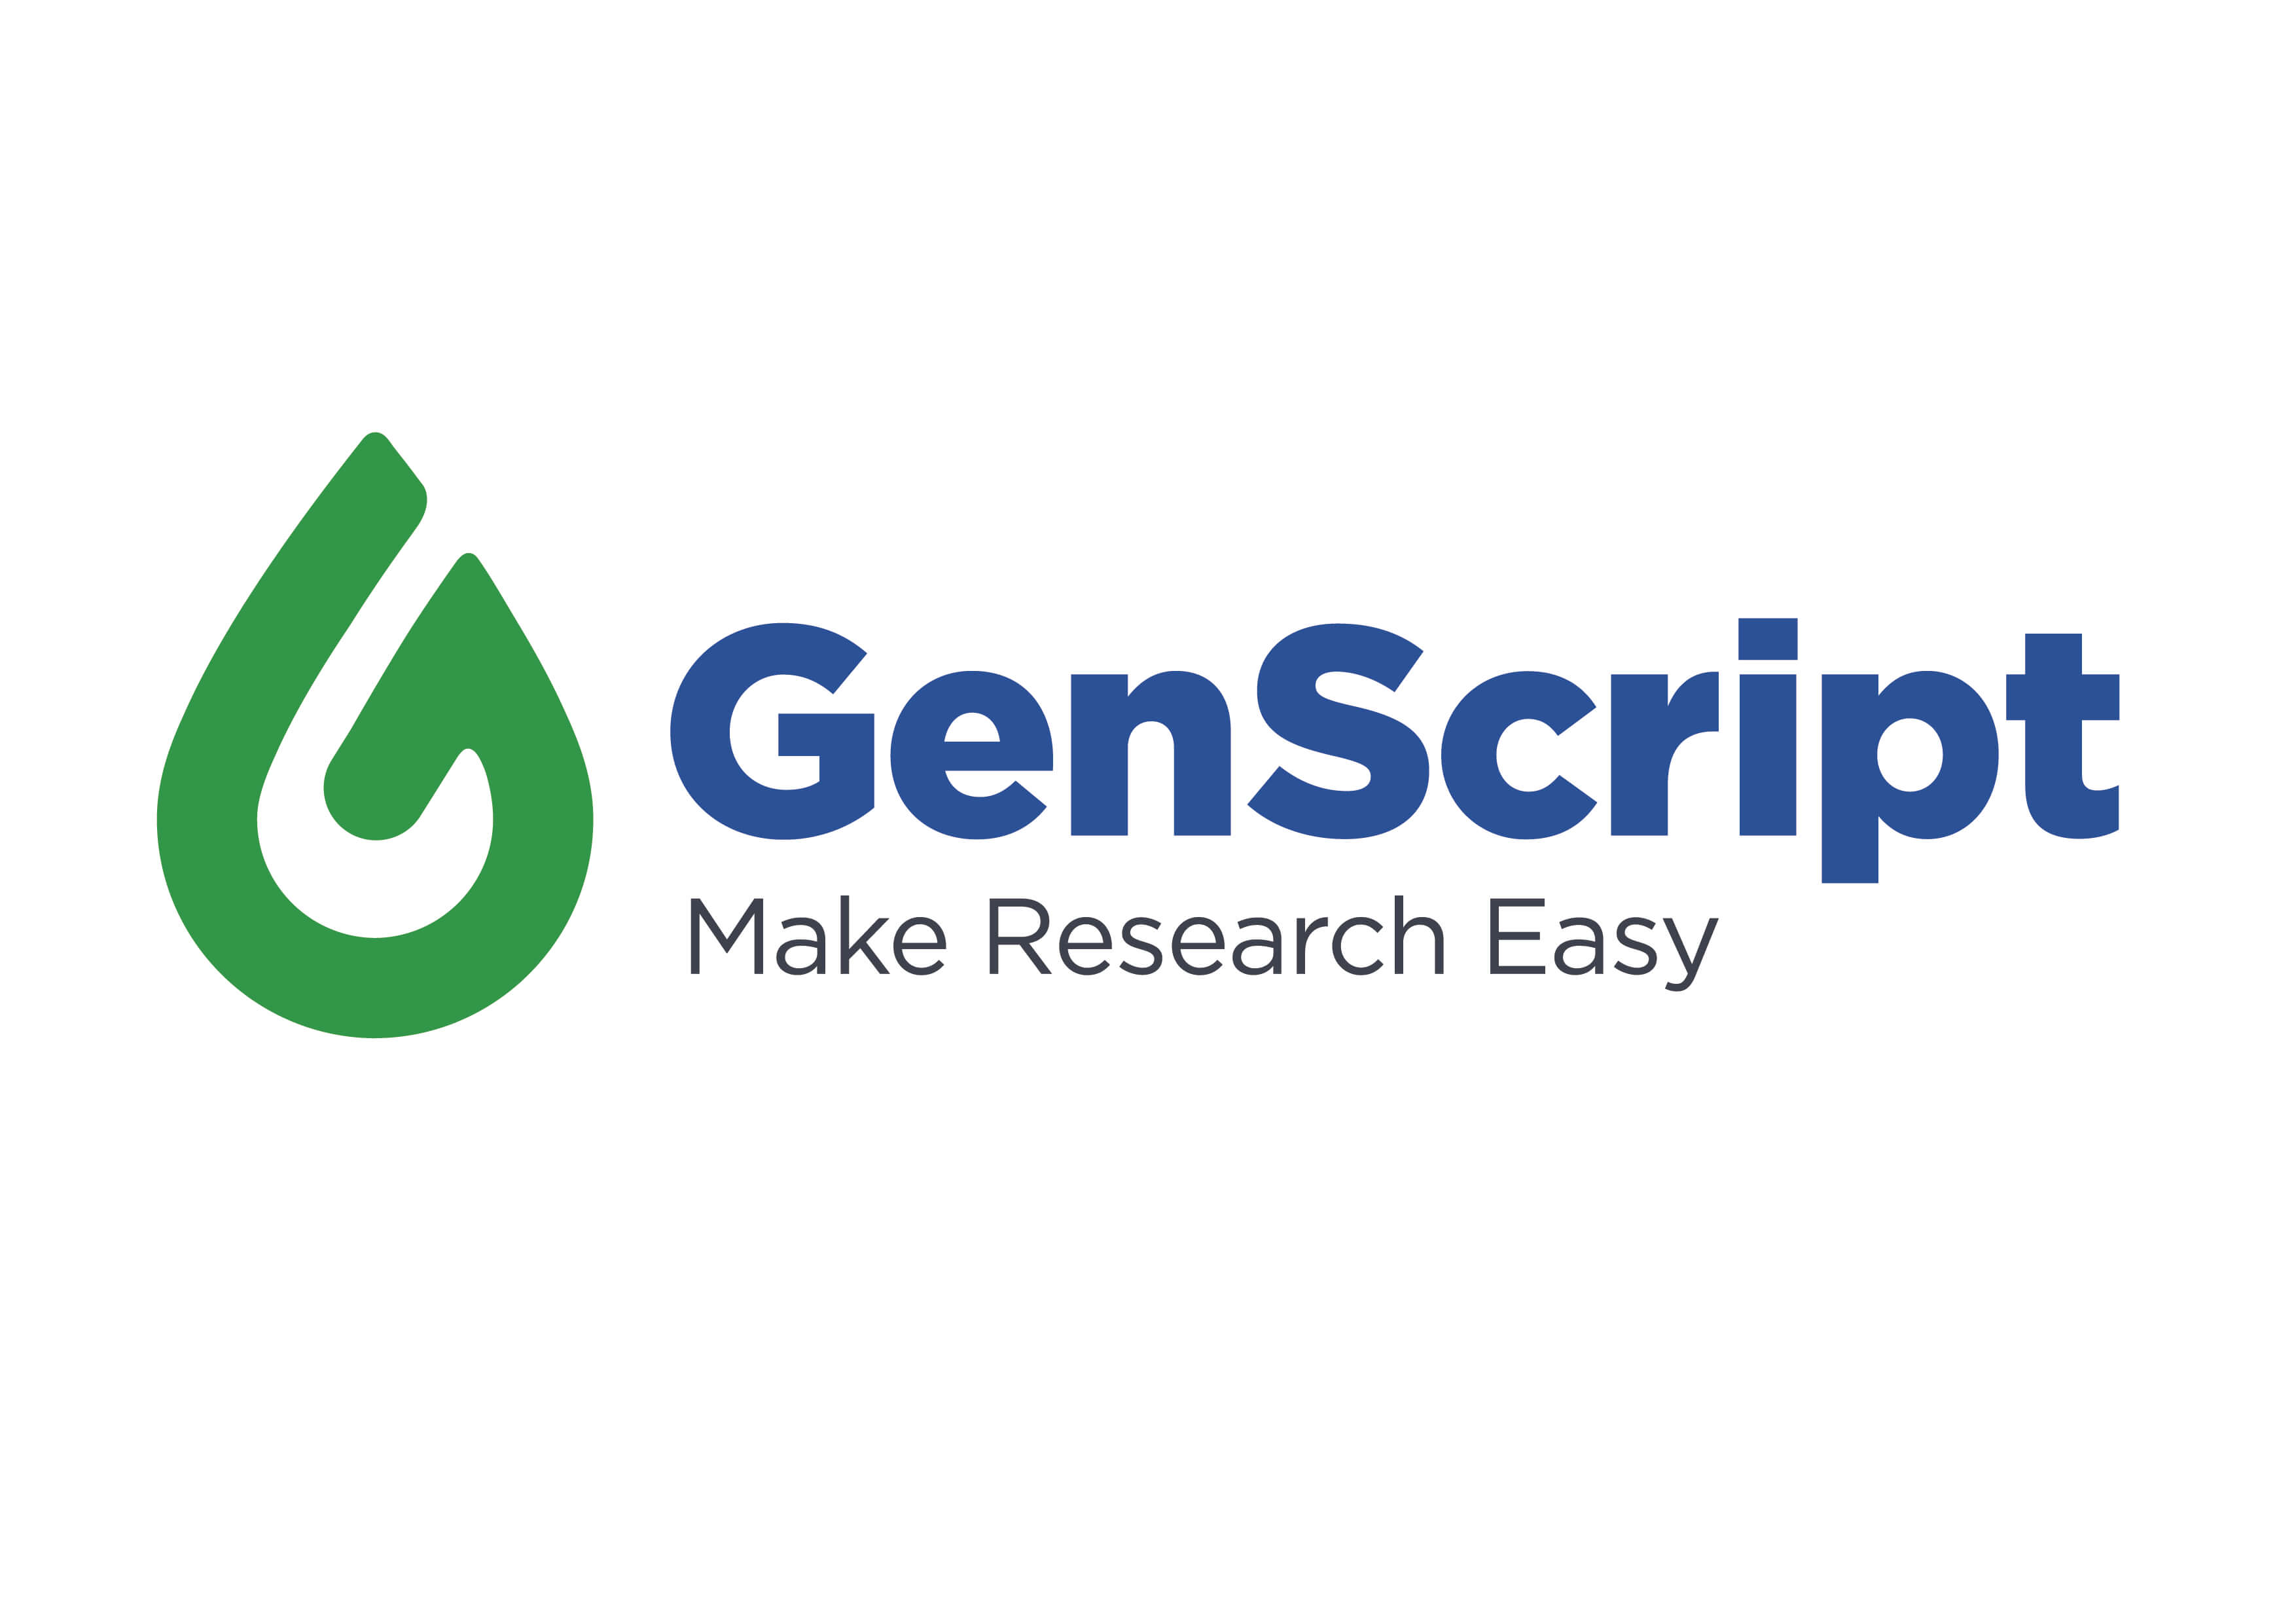 GenScript logo